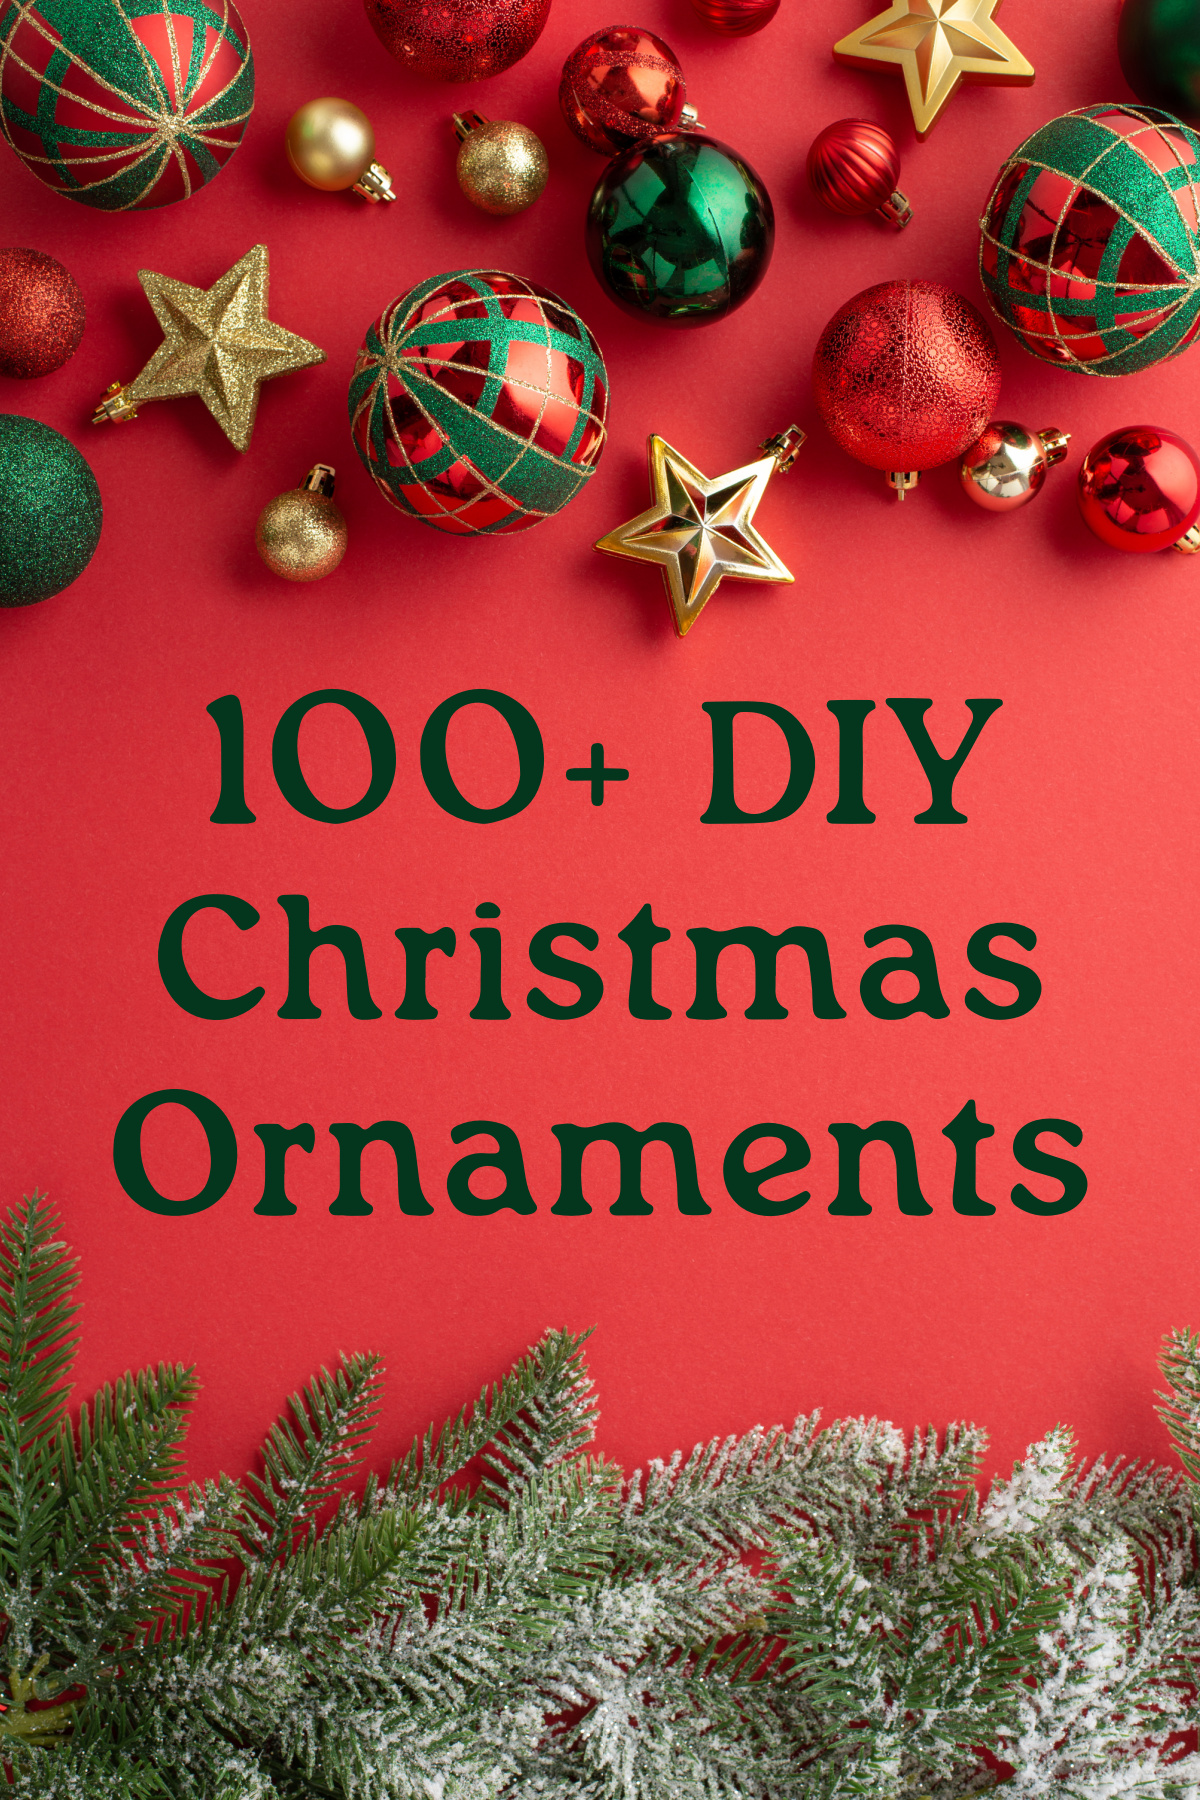 100+ DIY Christmas Ornaments